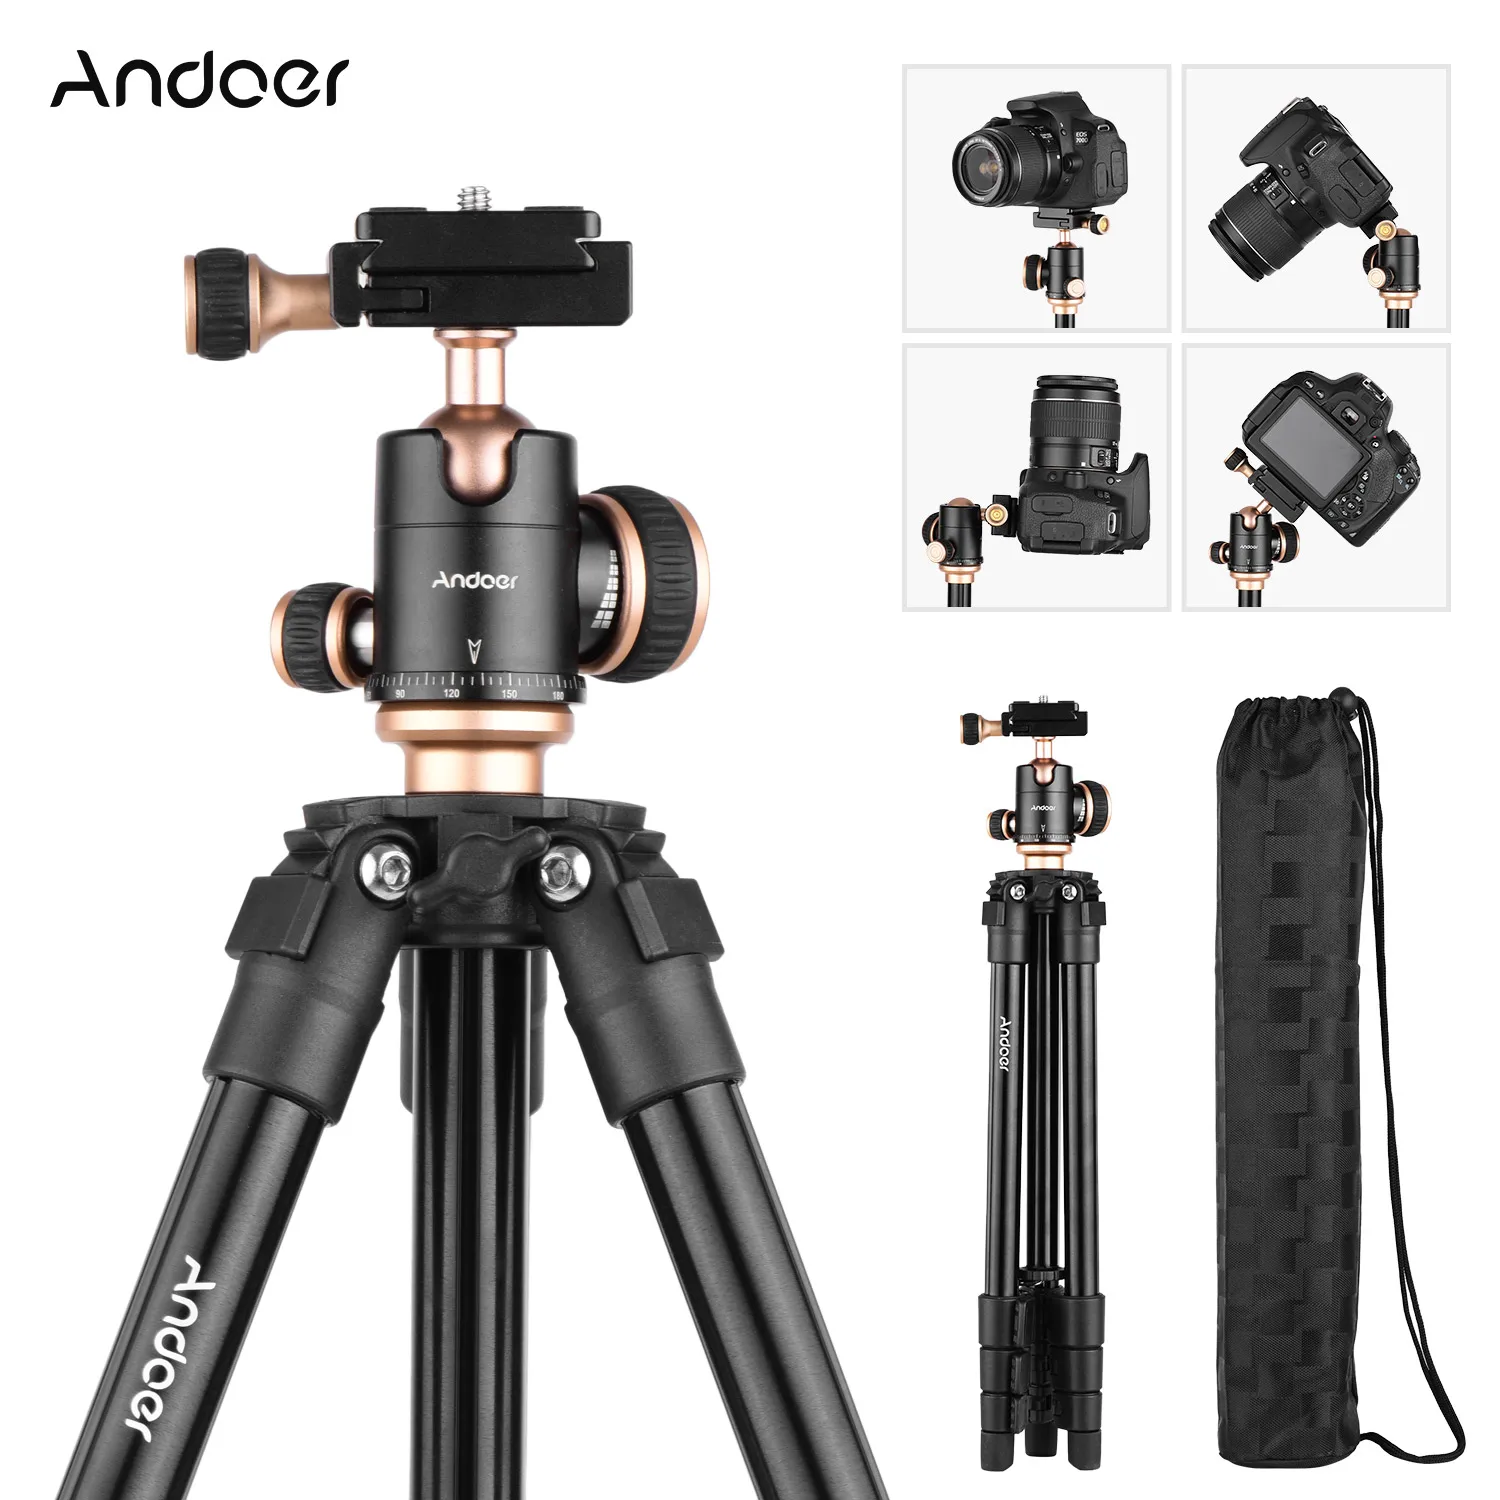 

Andoer Camera Tripod Complete Tripods with Ballhead Bubble Level Travel Tripod for DSLR Digital Cameras Camcorder Mini Projector